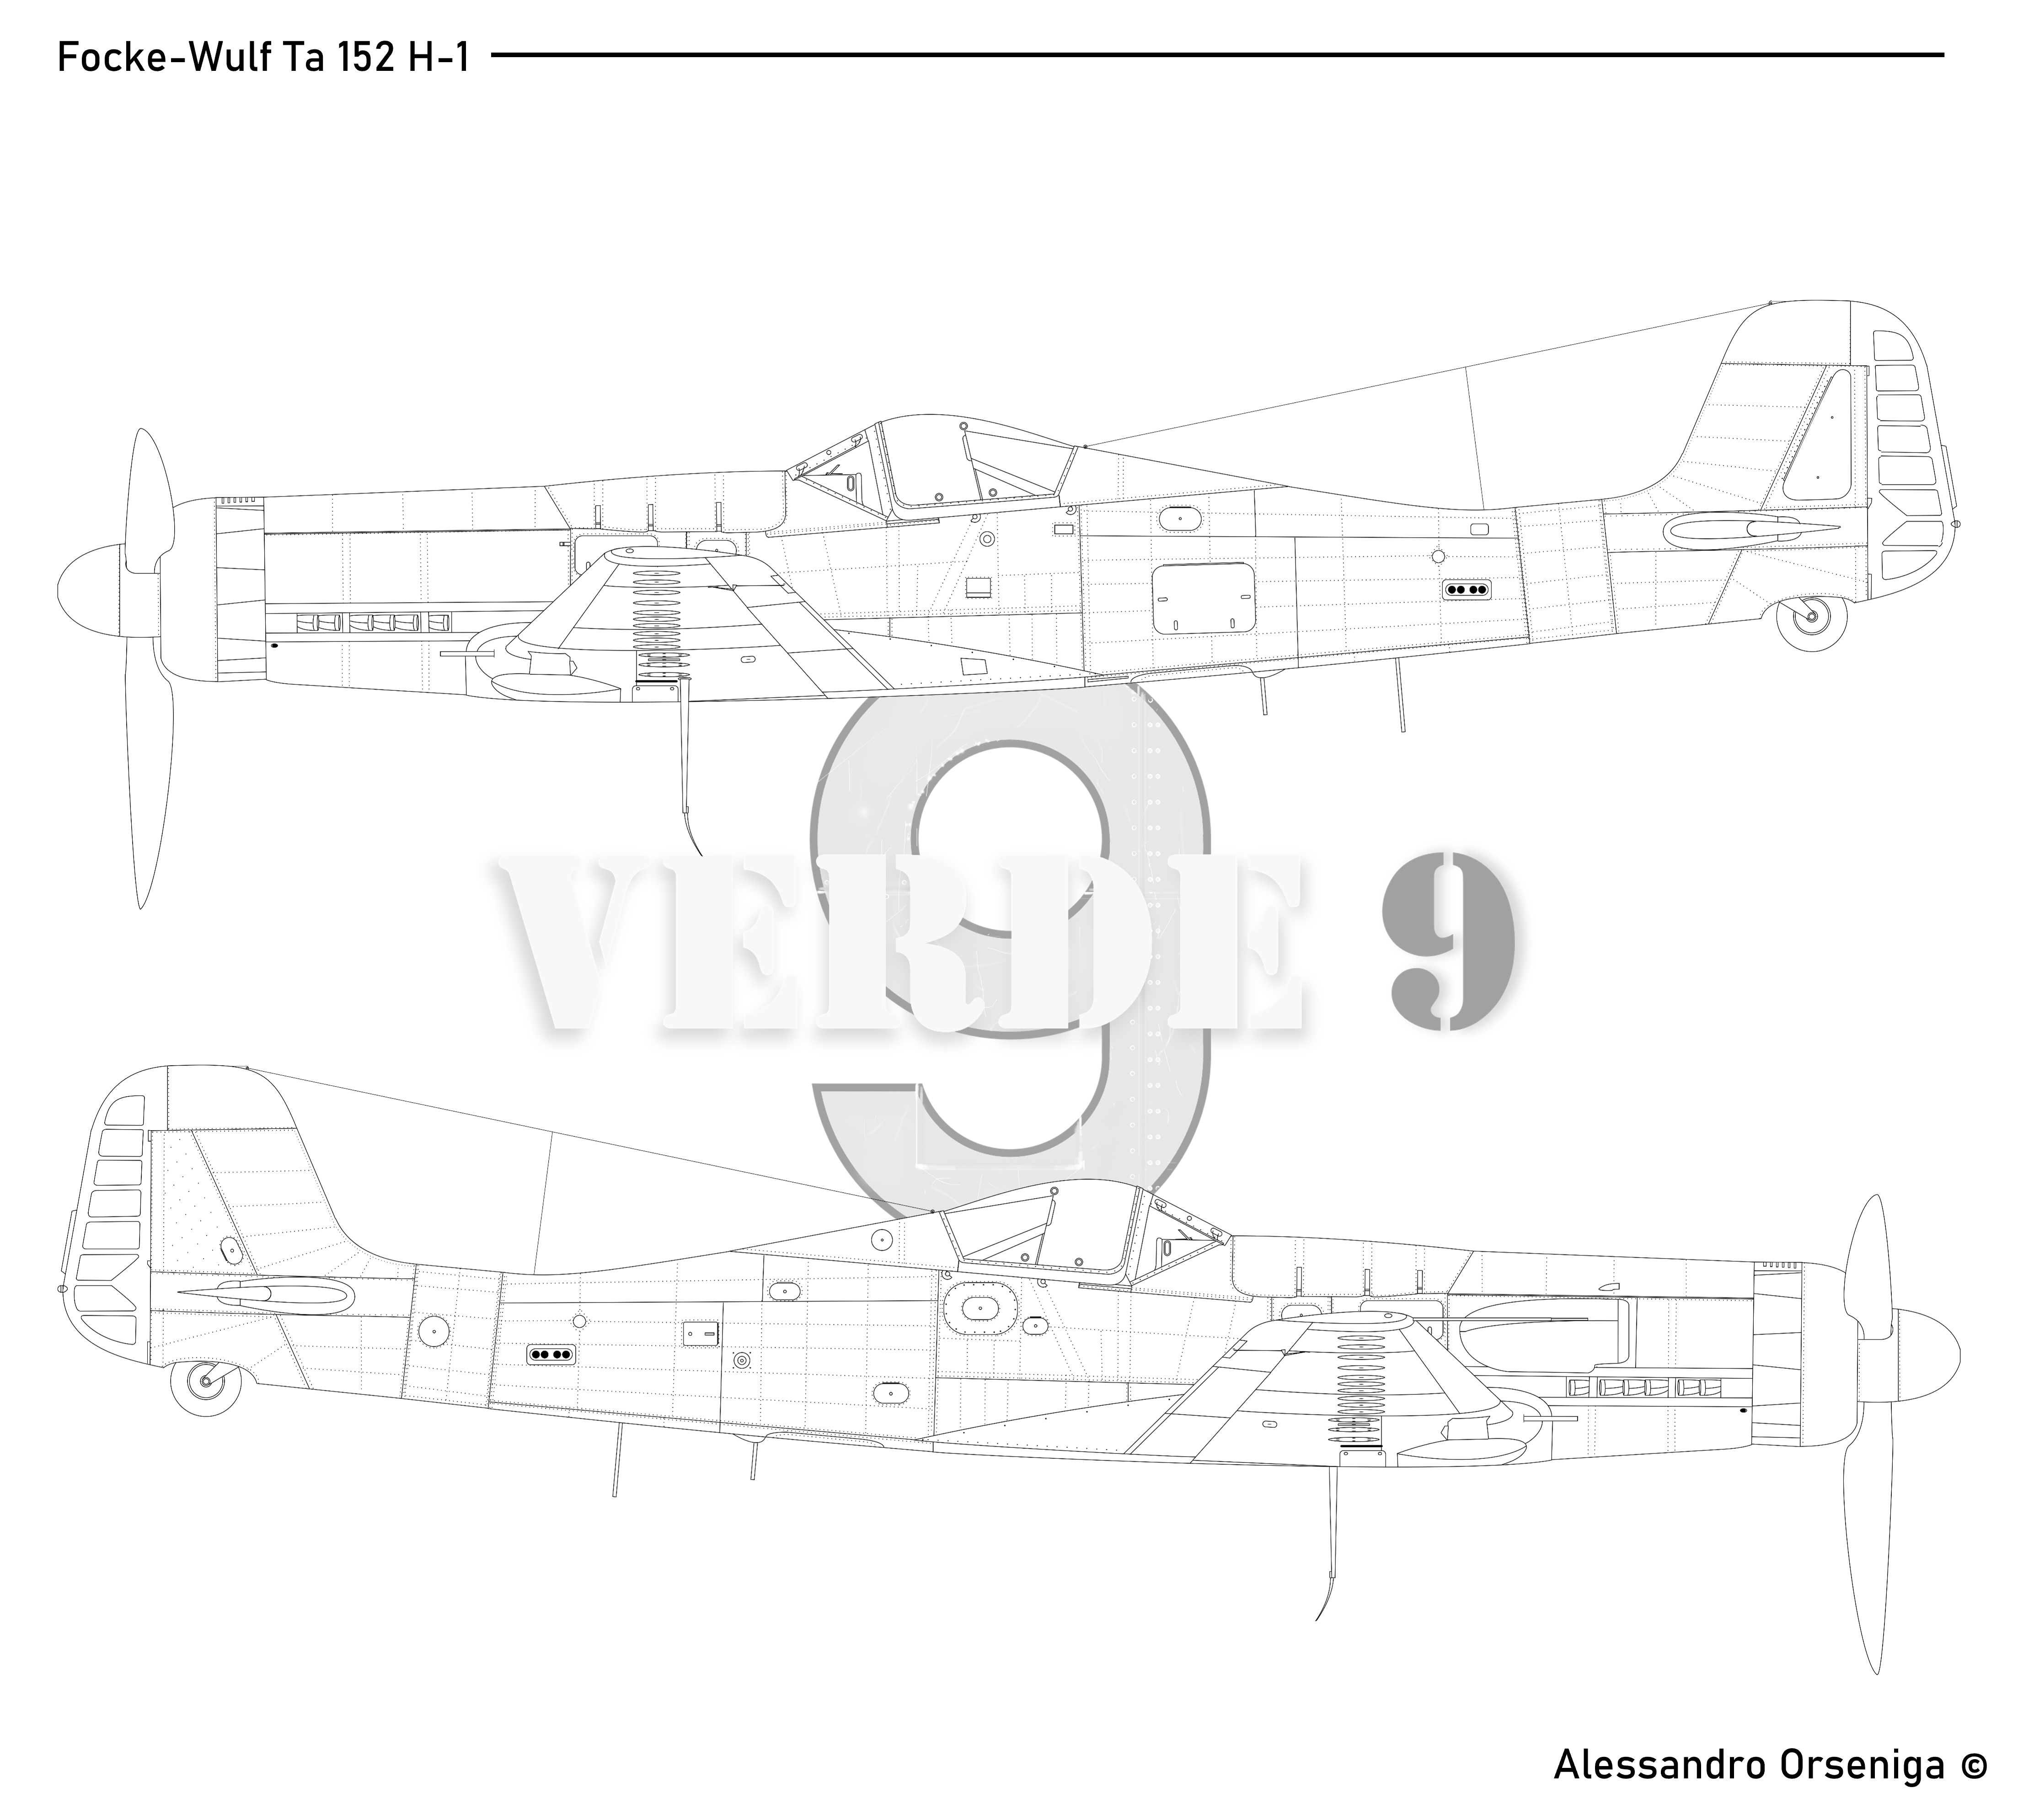 Technical profile of the Focke-Wulf Ta 152 H-1